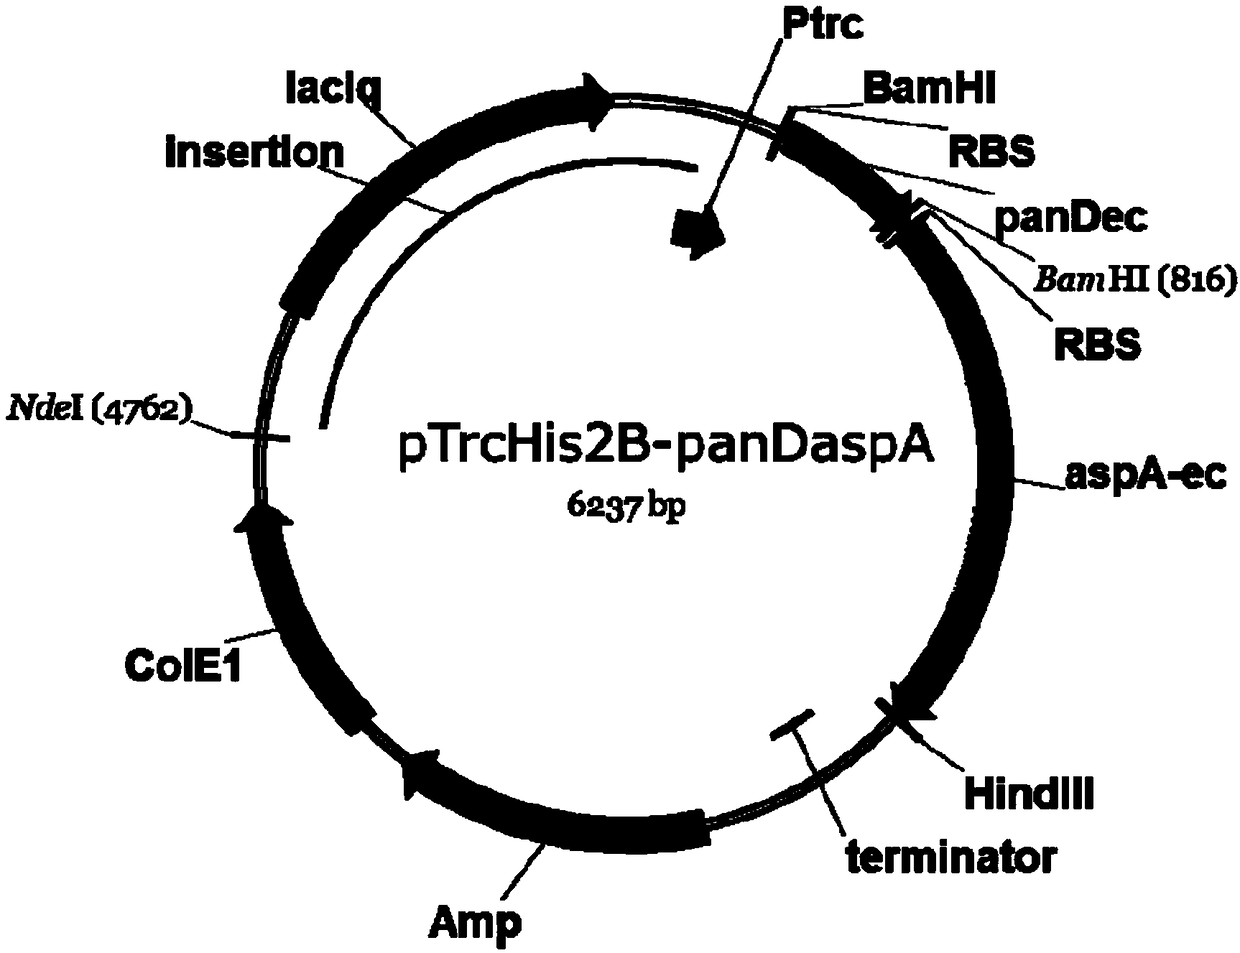 Production method for 3-aminoisobutyric acid